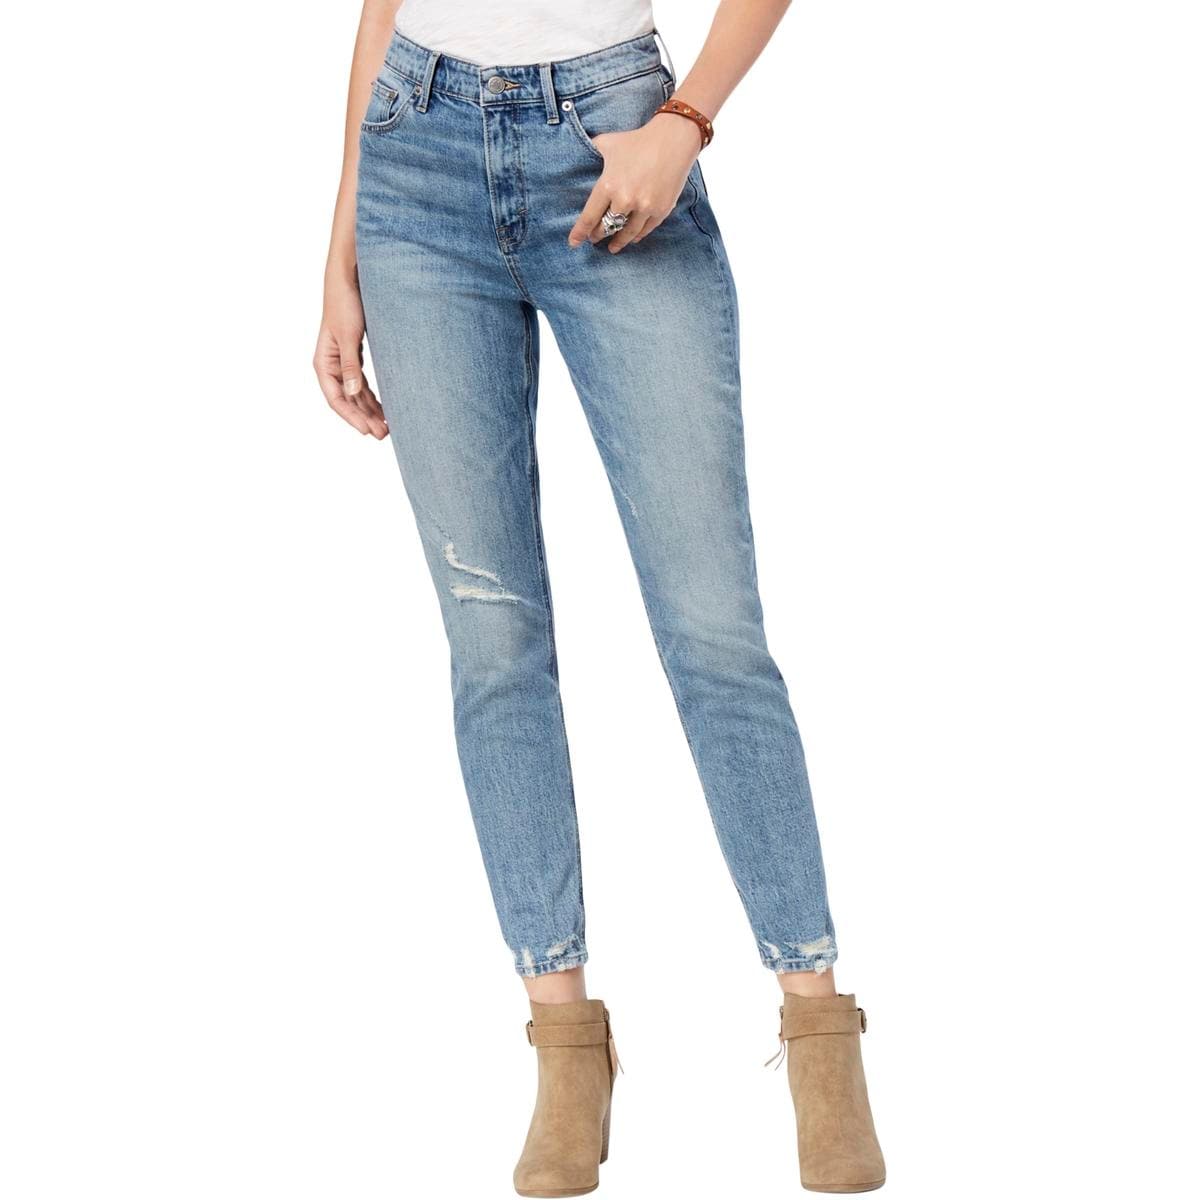 lucky brand skinny jeans womens